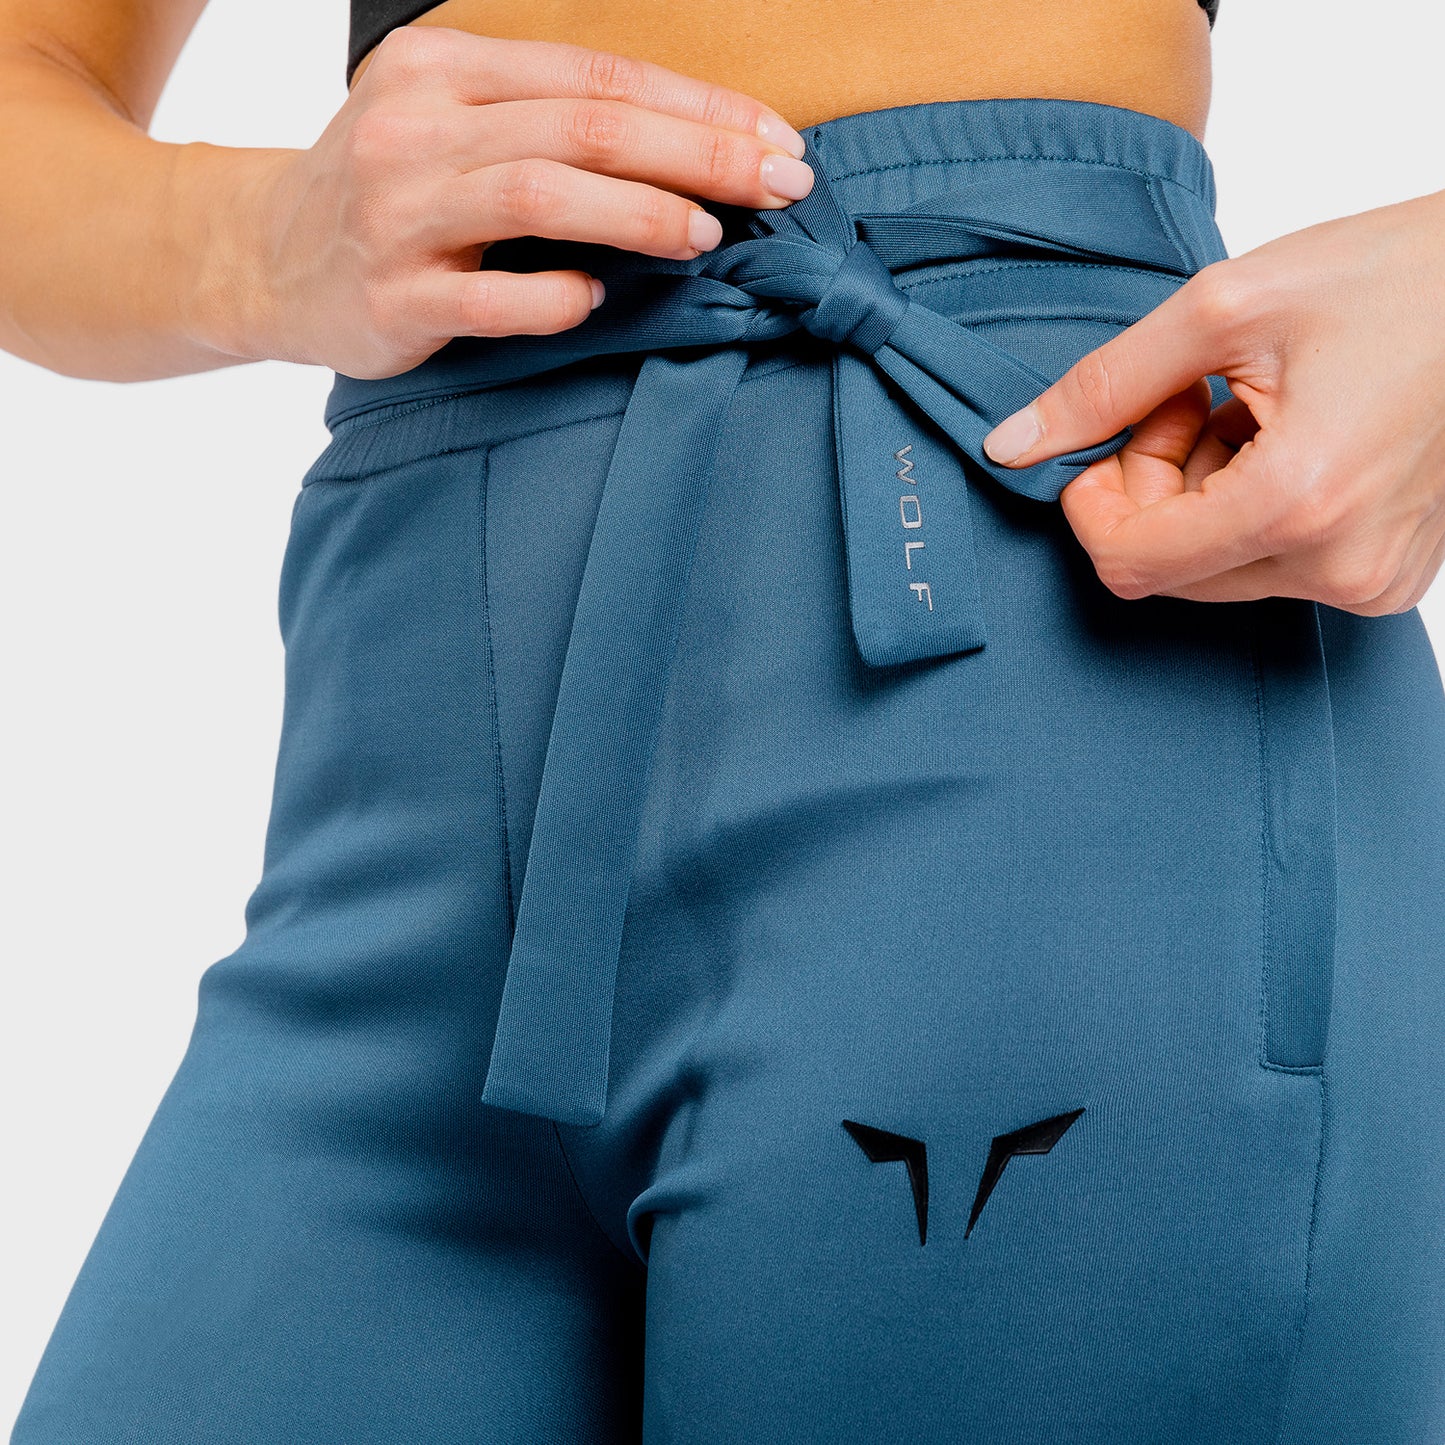 Squat Wolf DO KNOT WOMENS JOGGERS Track Pants Slim Cuff Pockets